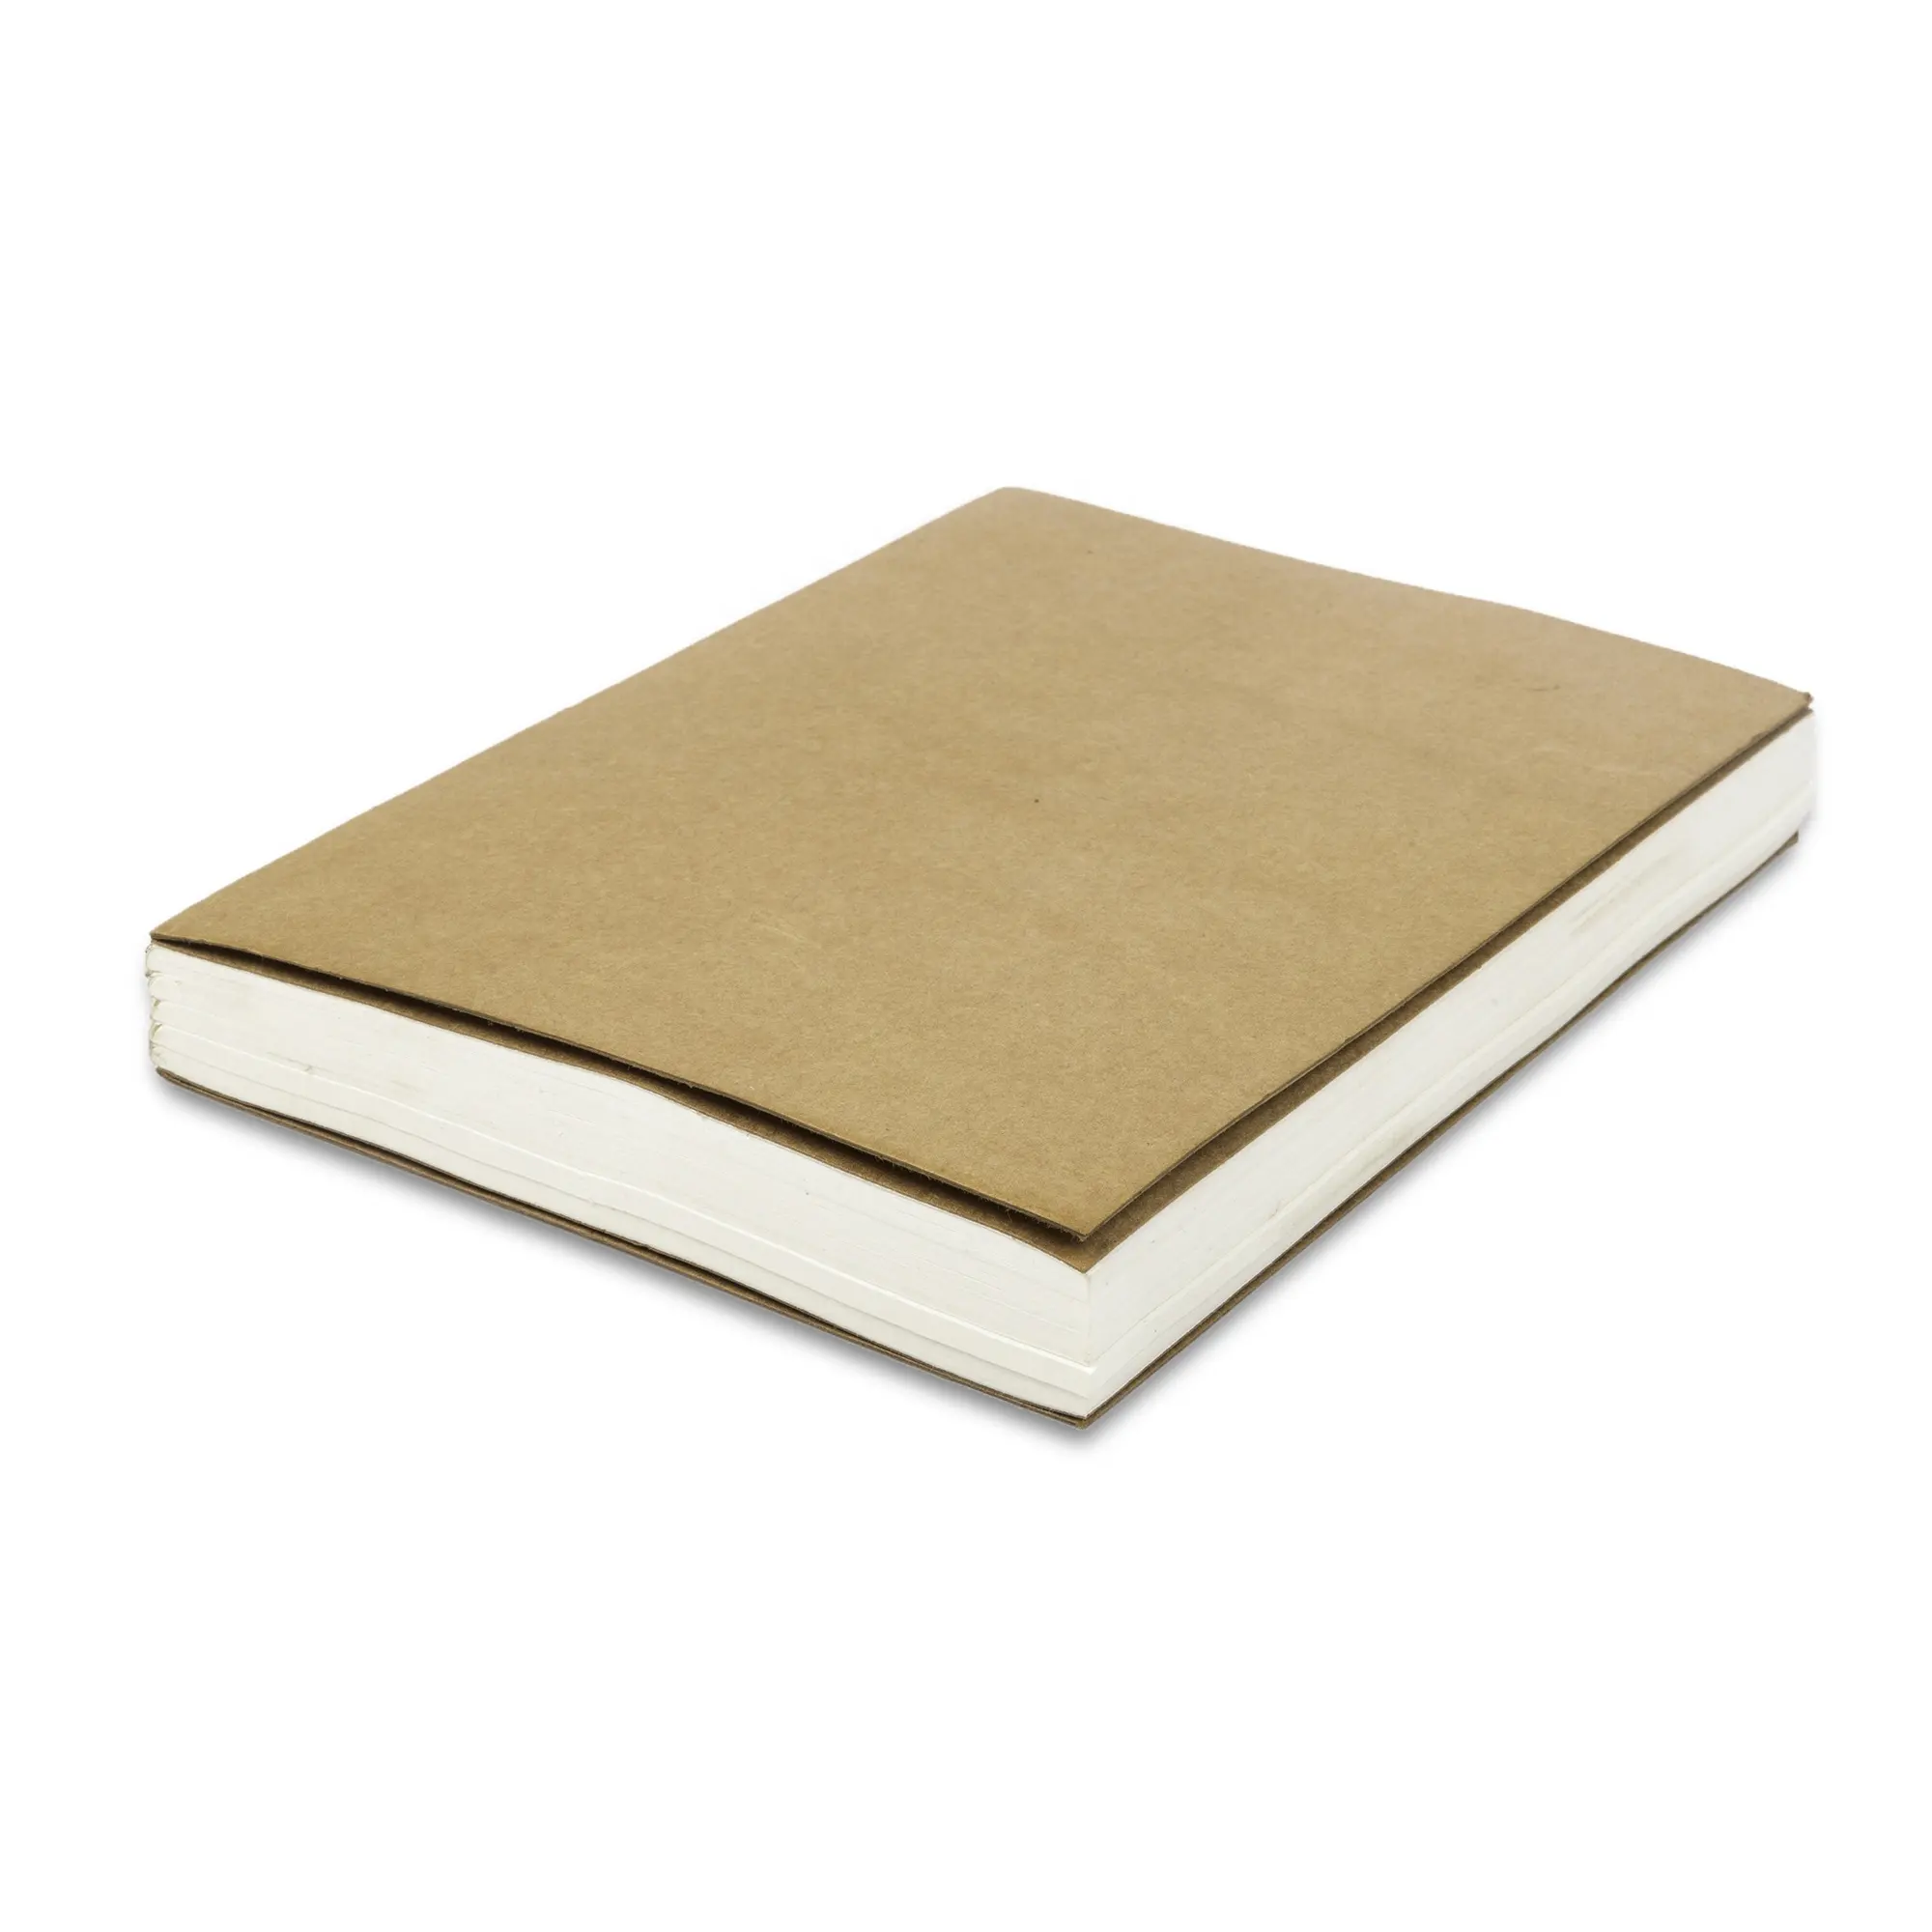 Recambios de papel de algodón hechos a mano para papel forrado o sin forro tamaño A5 para diarios y cuadernos o recambios para diarios de cuero